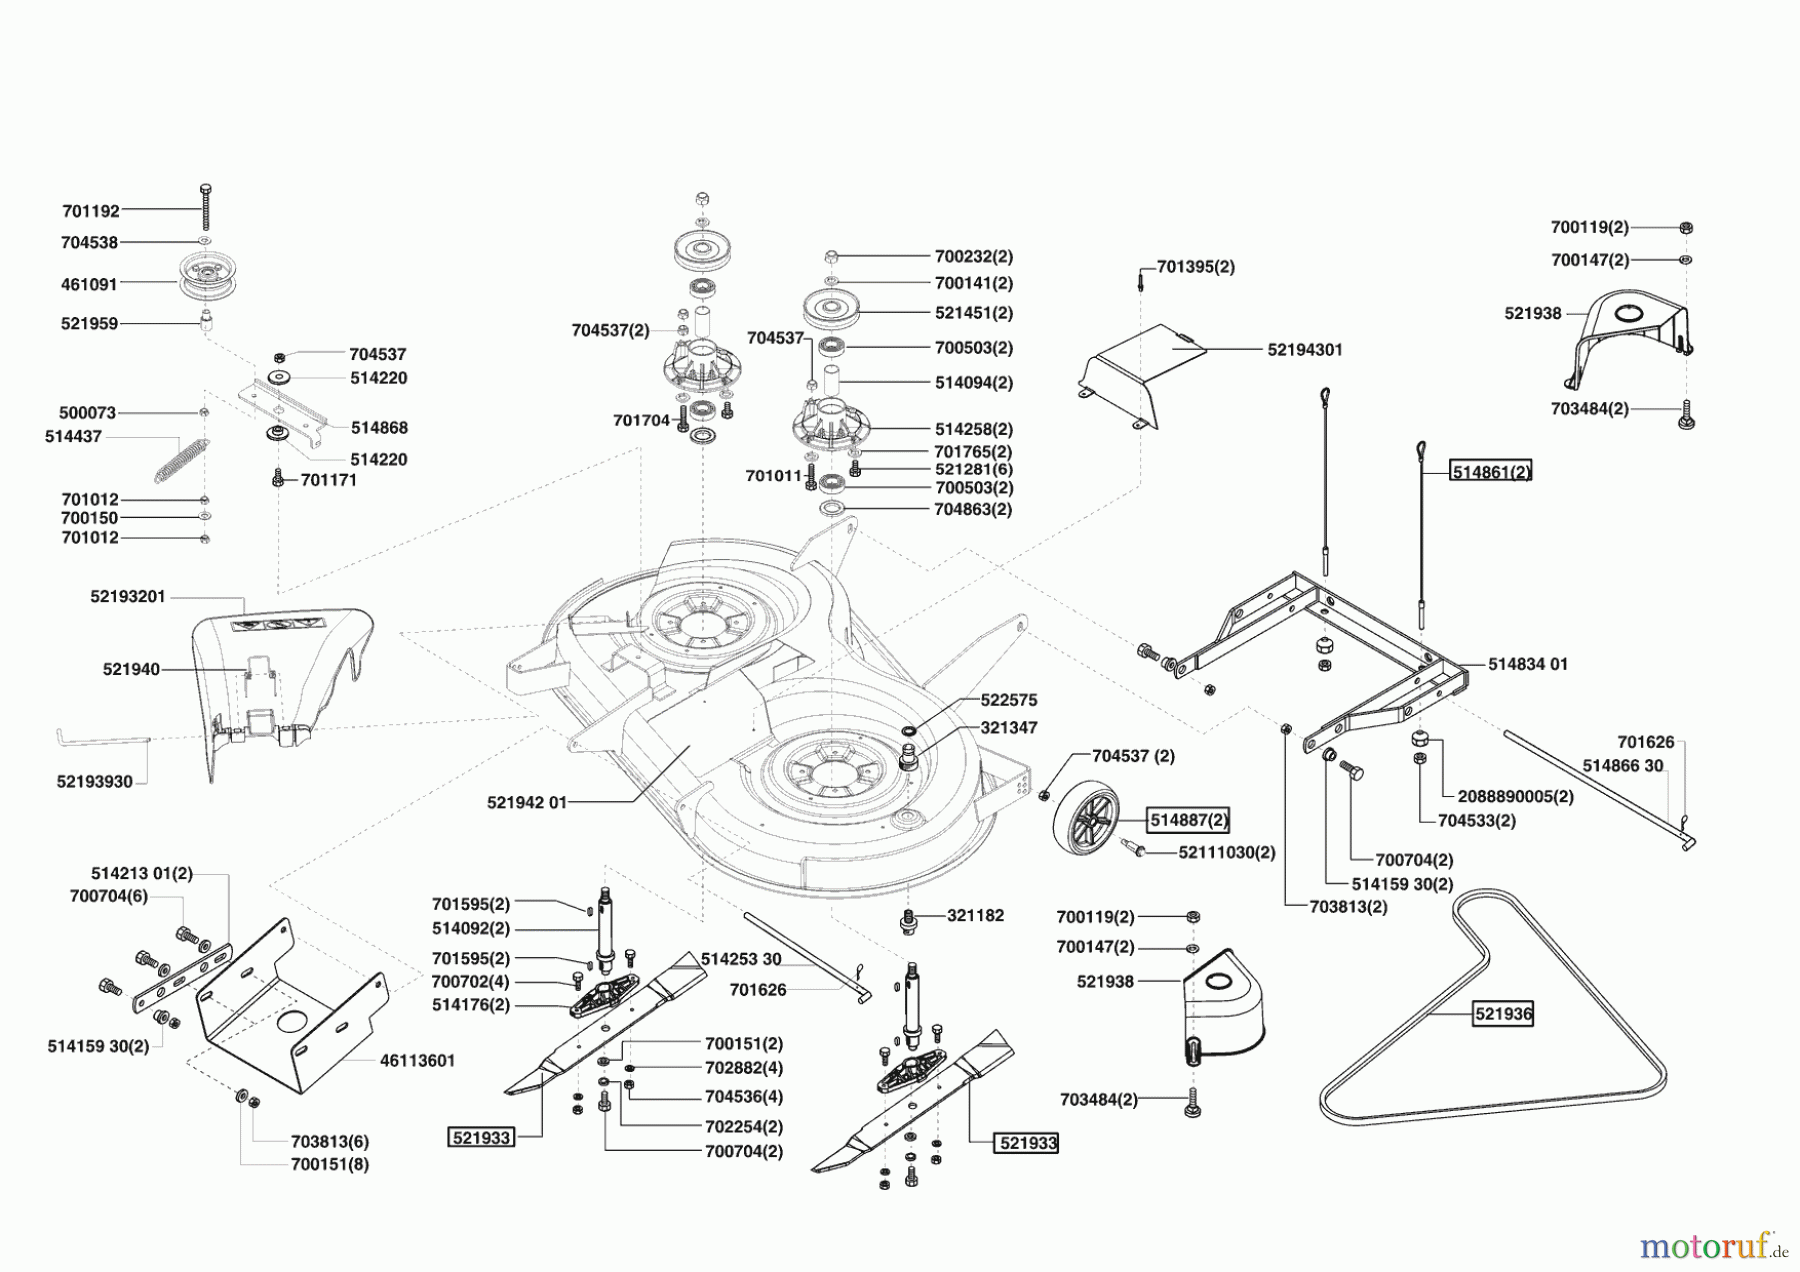  Concord Gartentechnik Rasentraktor T 15-102 HDS Masport  10/2003 Seite 5